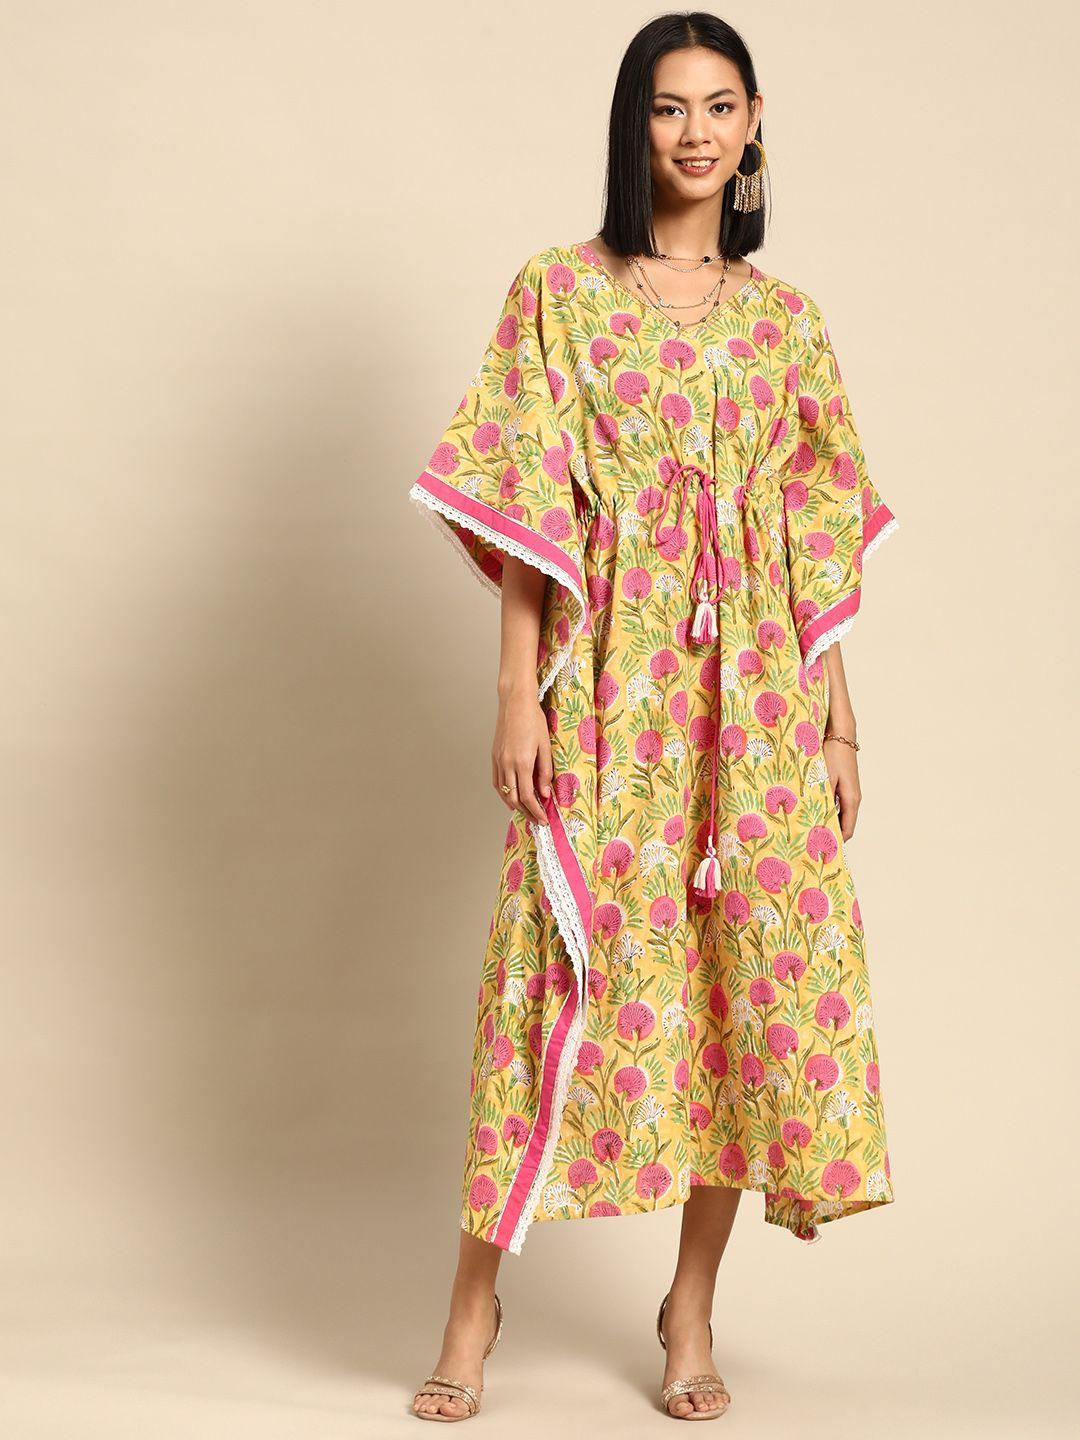 rangmayee yellow & pink floral ethnic kaftan midi dress